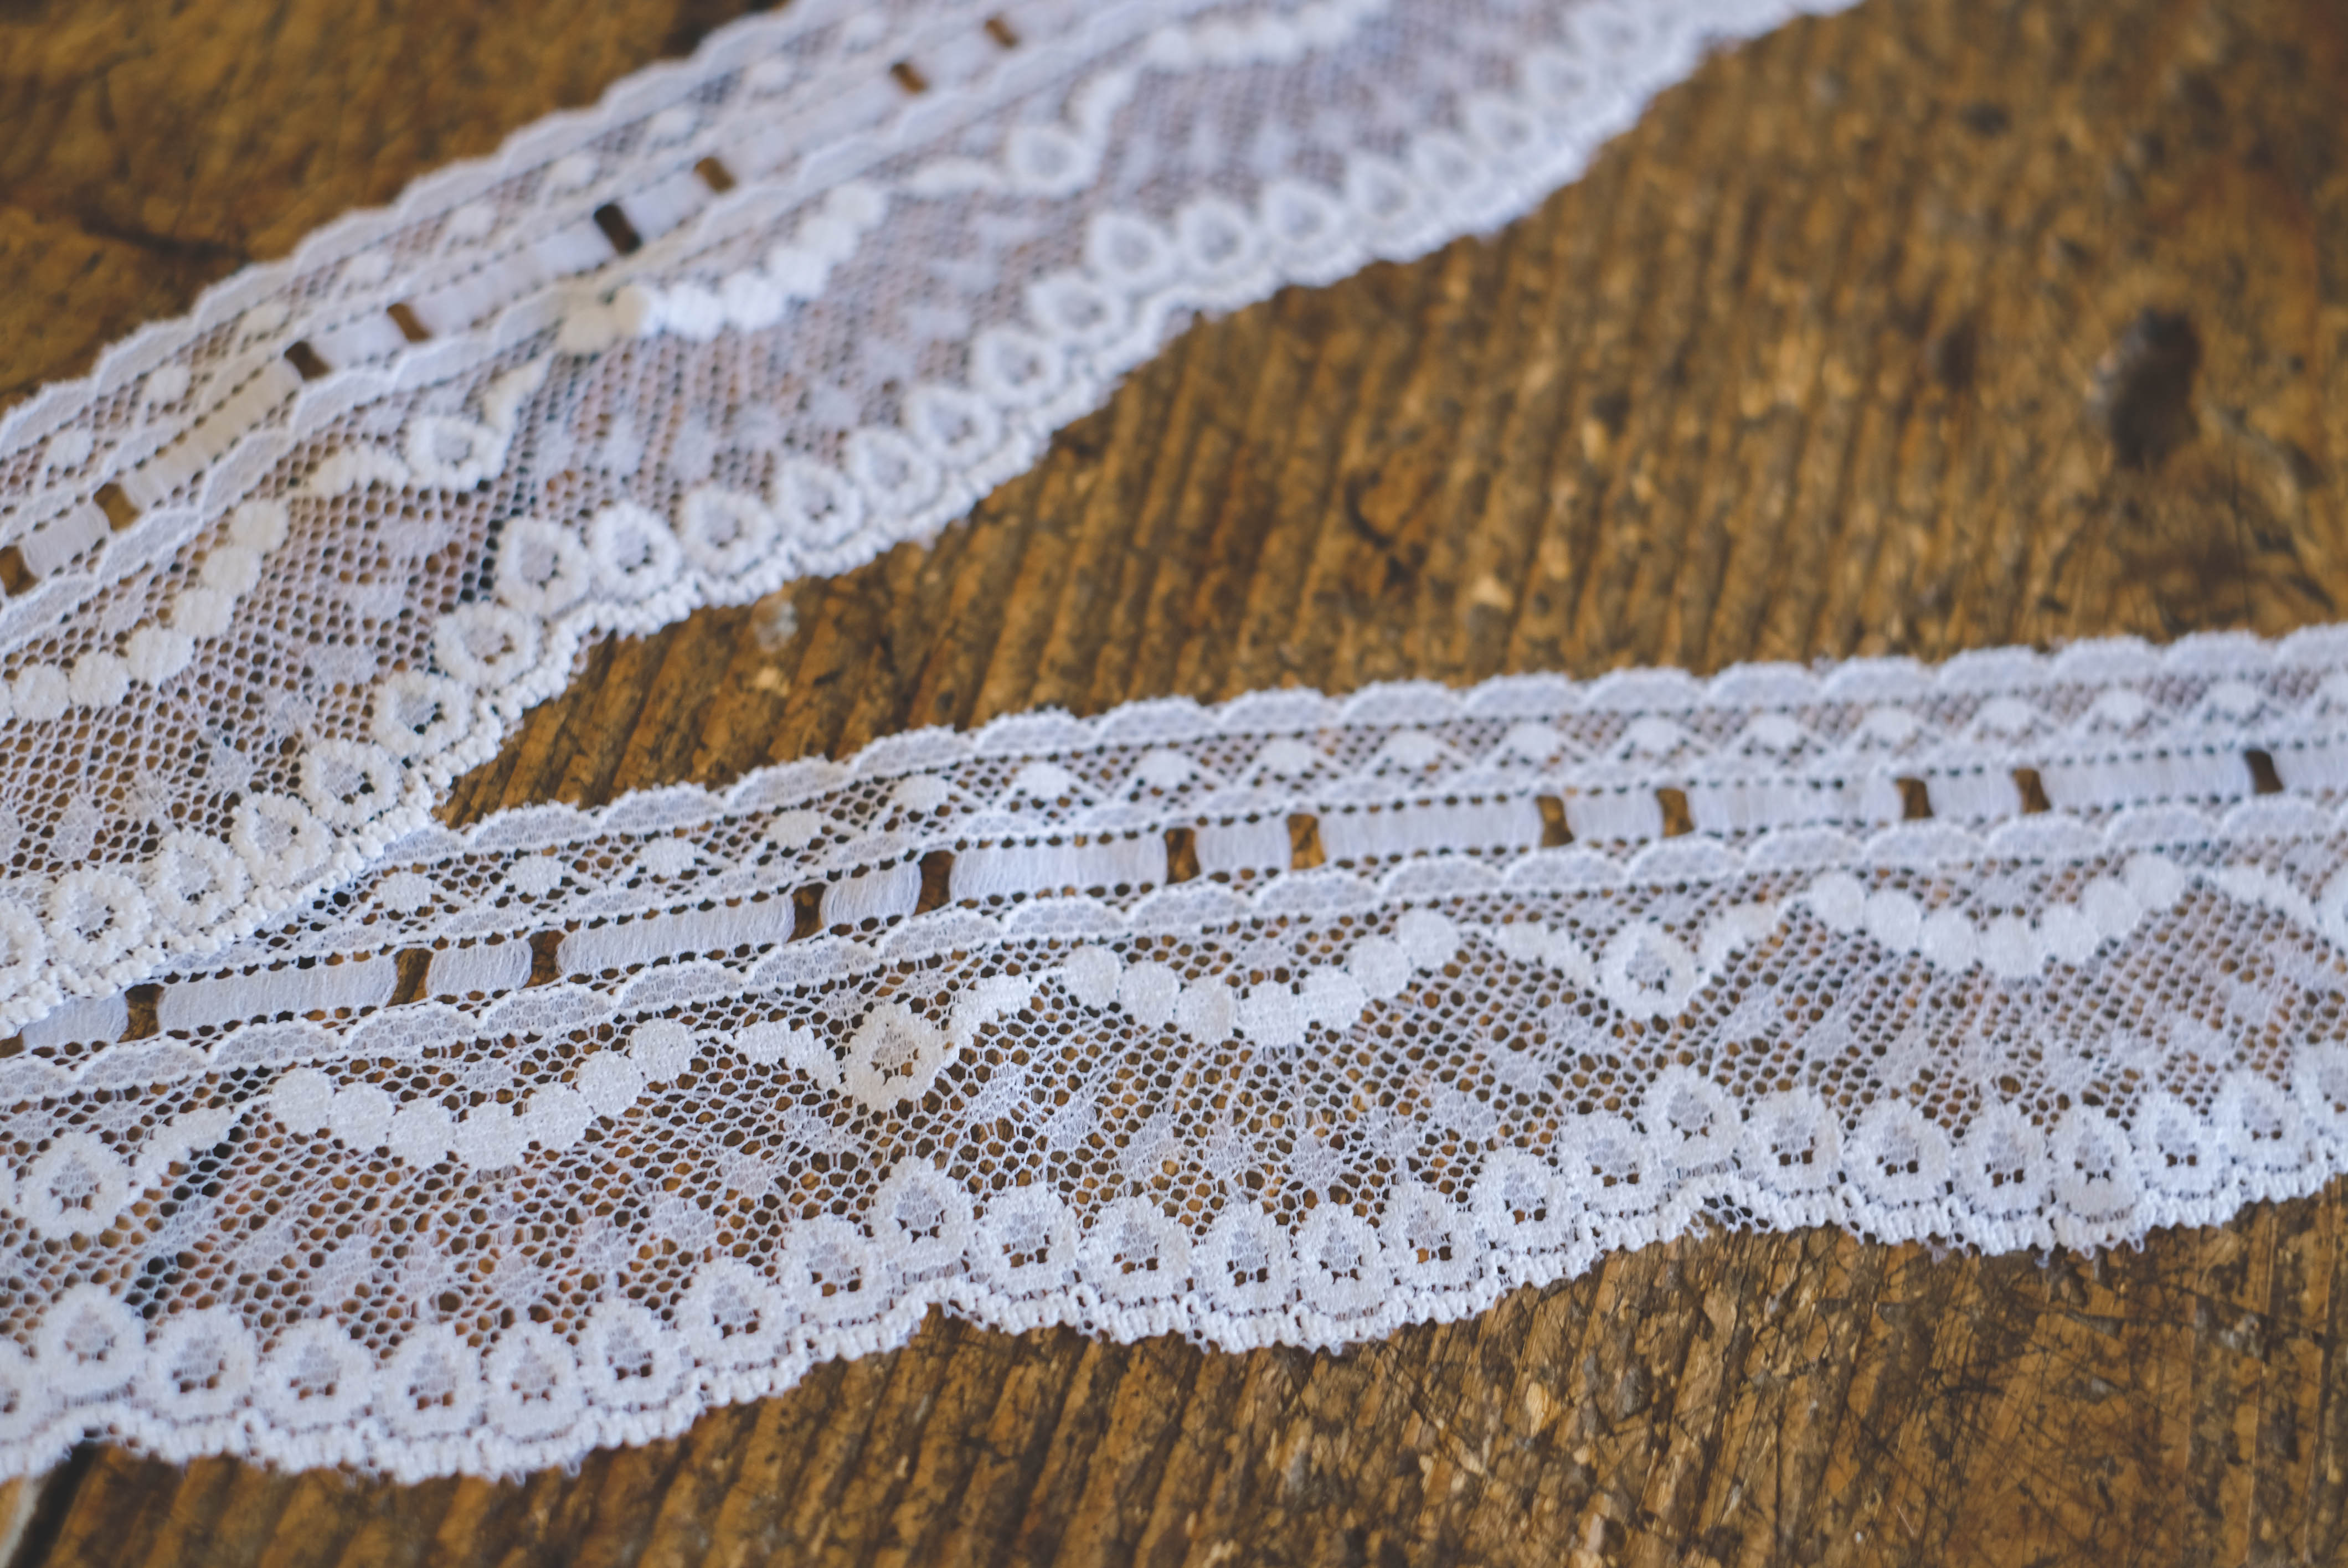 Nylon lace 5,8cm- white